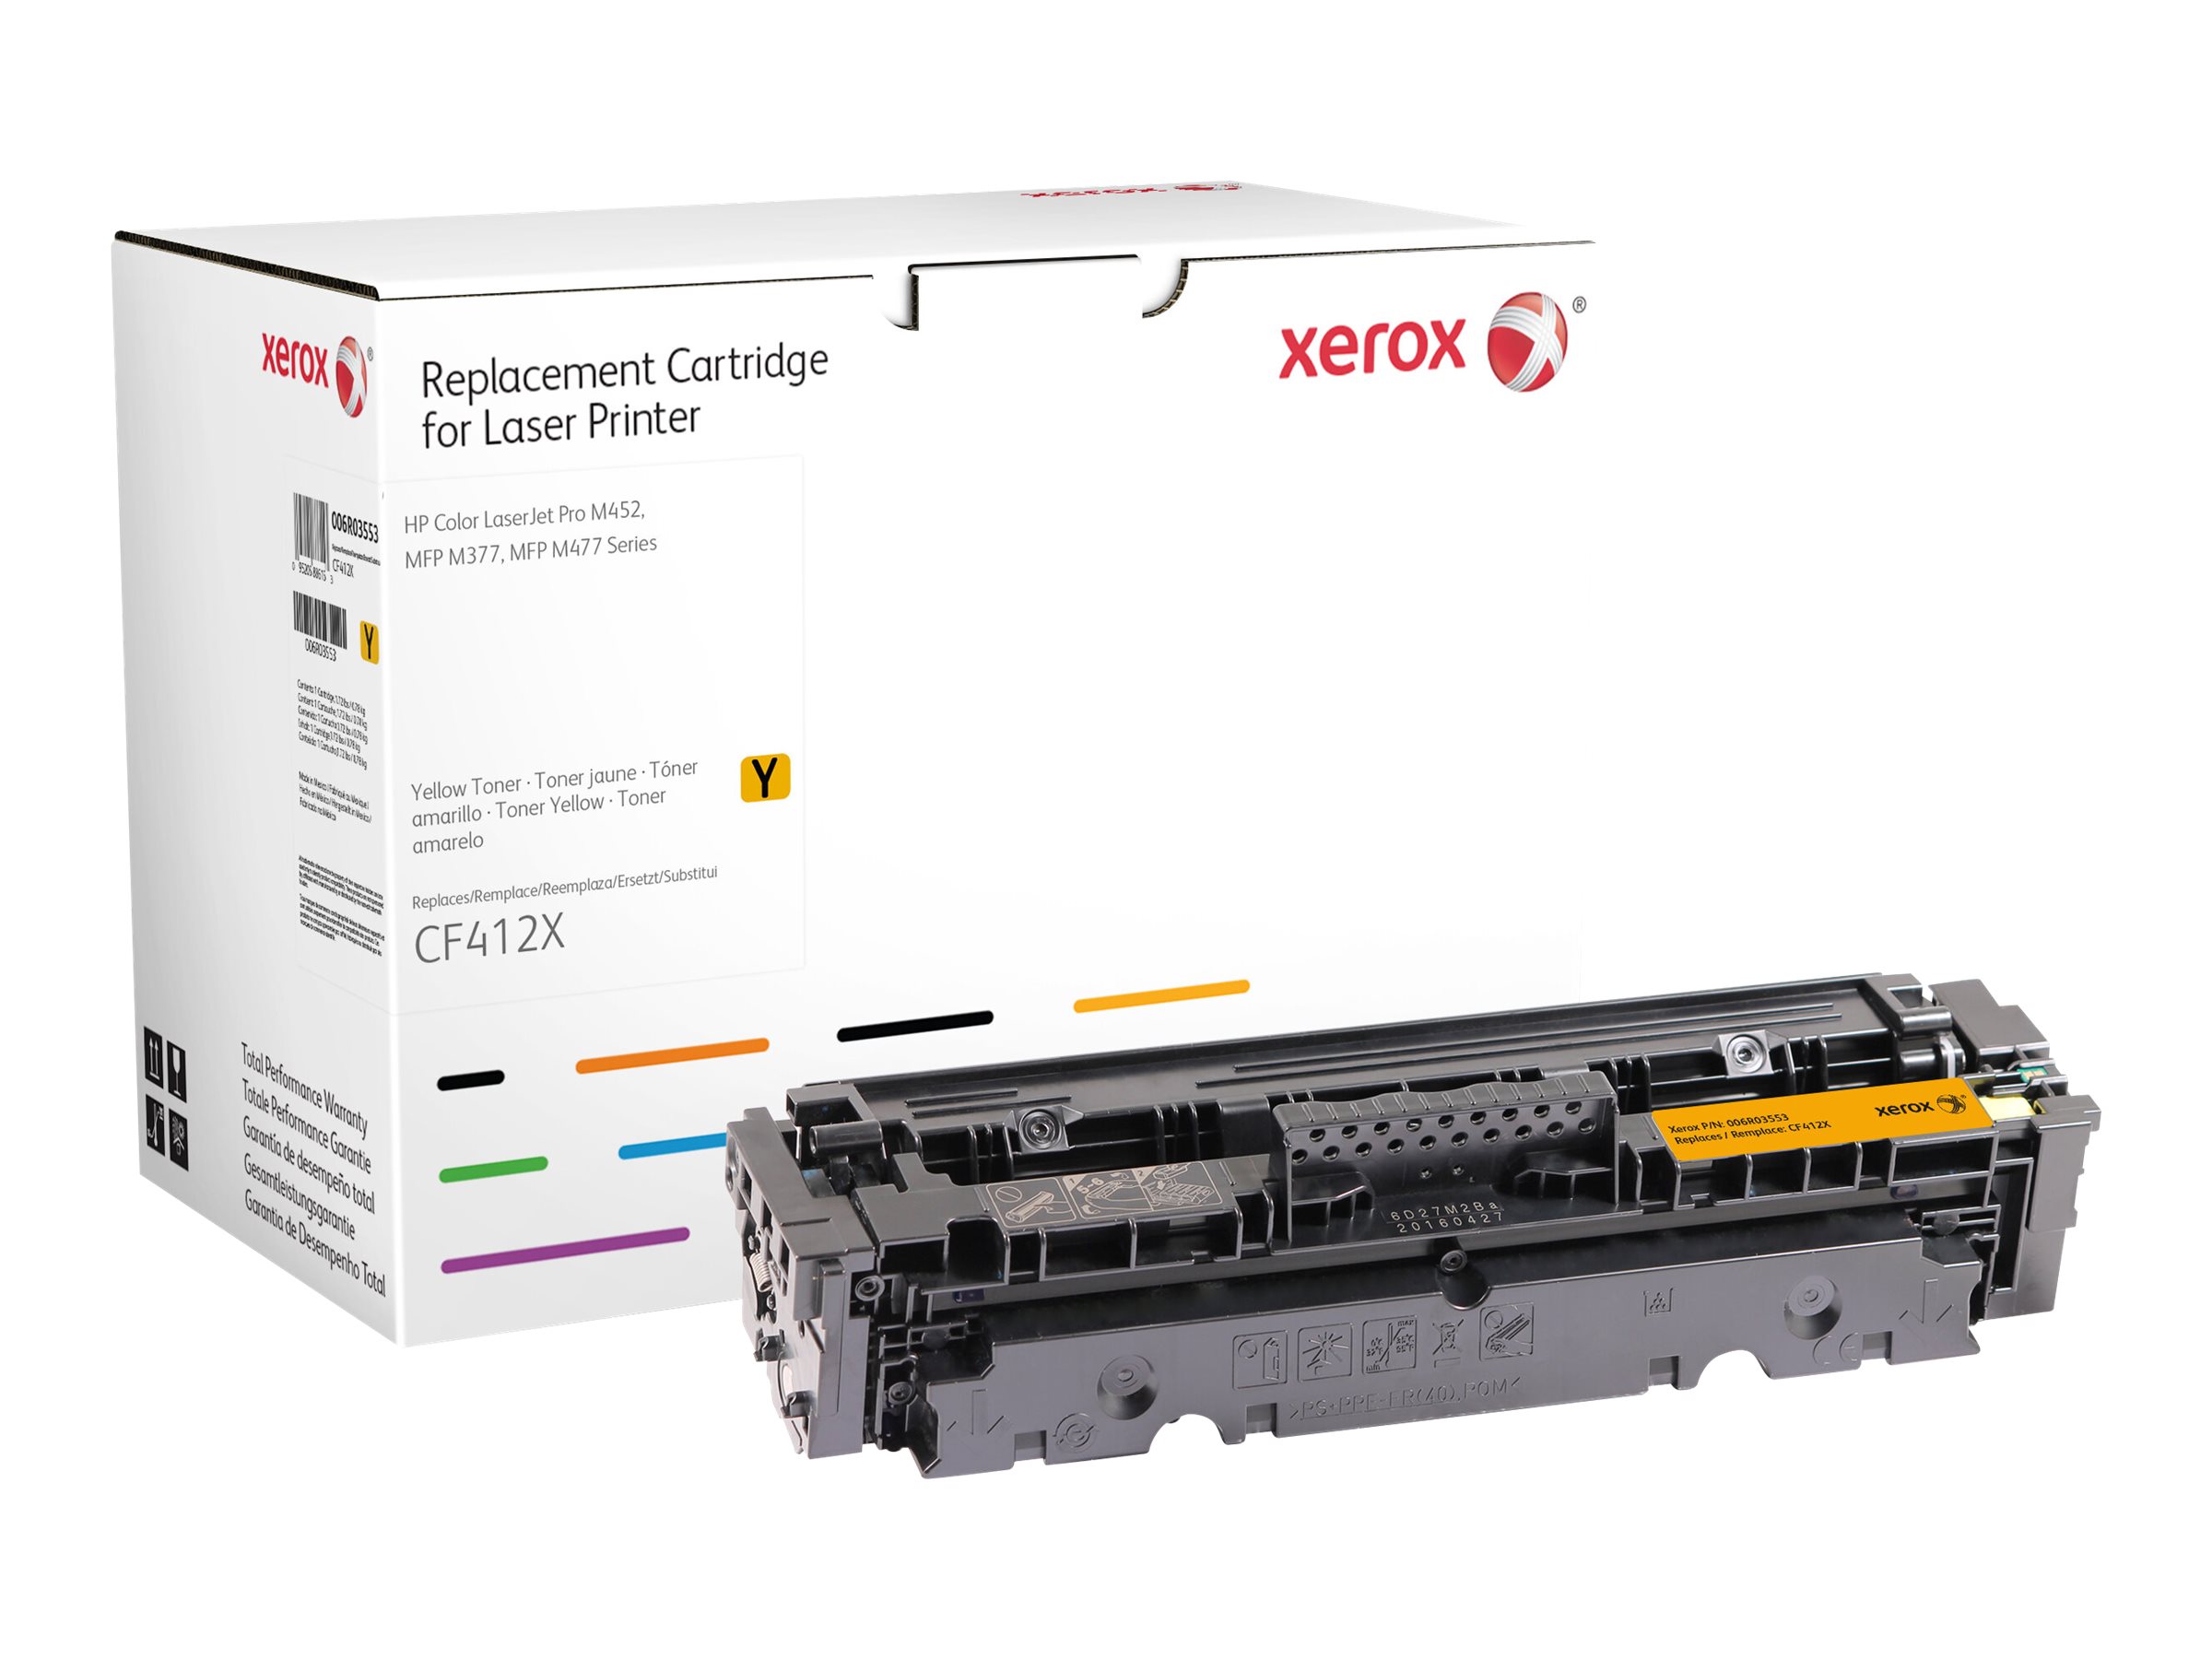 Xerox - Gelb - kompatibel - Tonerpatrone (Alternative zu: HP CF410X) - fr HP Color LaserJet Pro M452, MFP M377, MFP M477